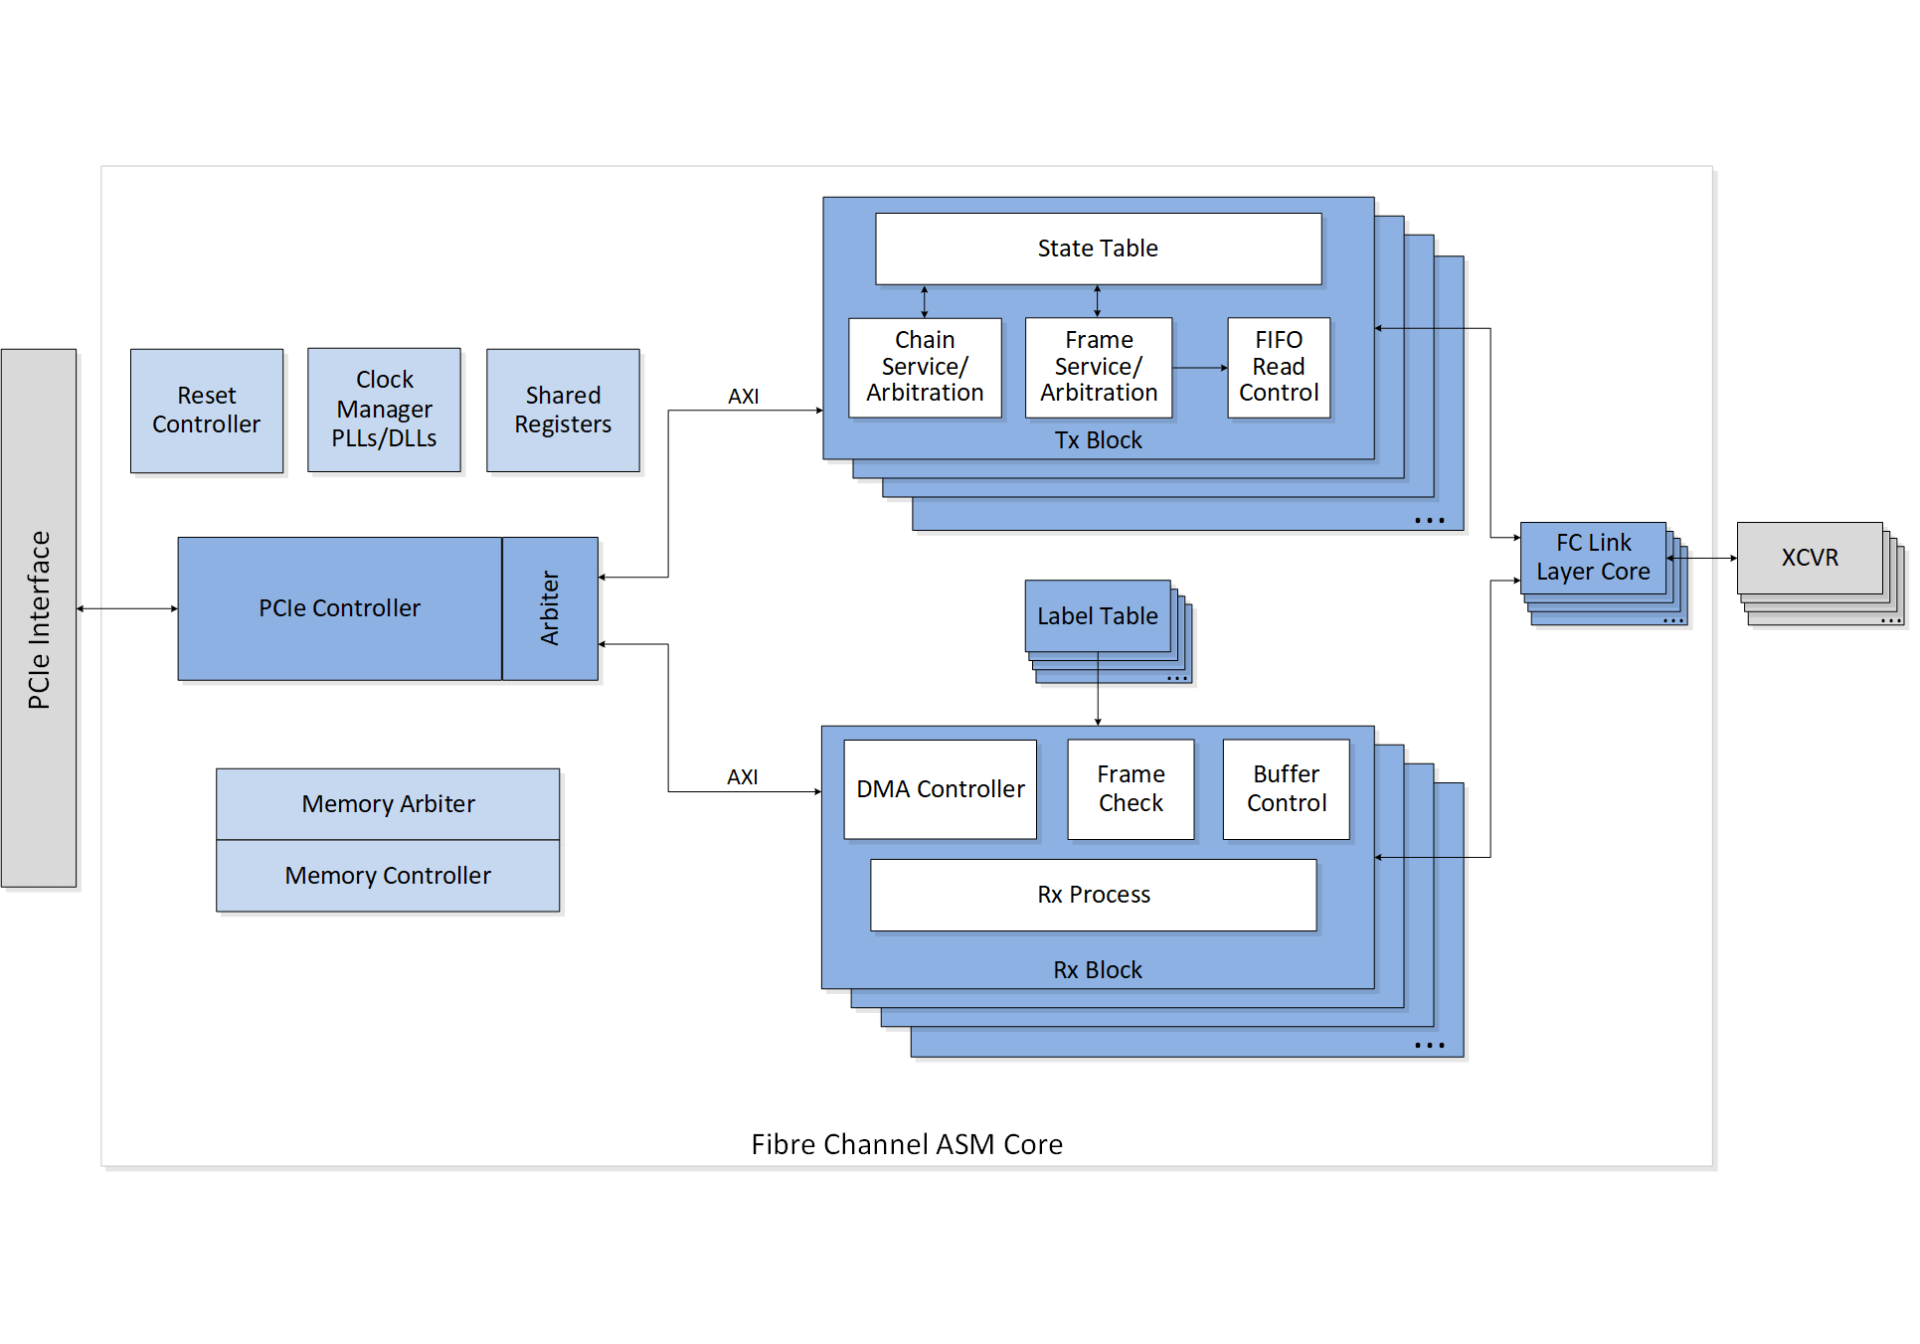 Fibre-Channel-ASM-Architecture-Diagram-11-17-2021_V3_Featured-1920x1344